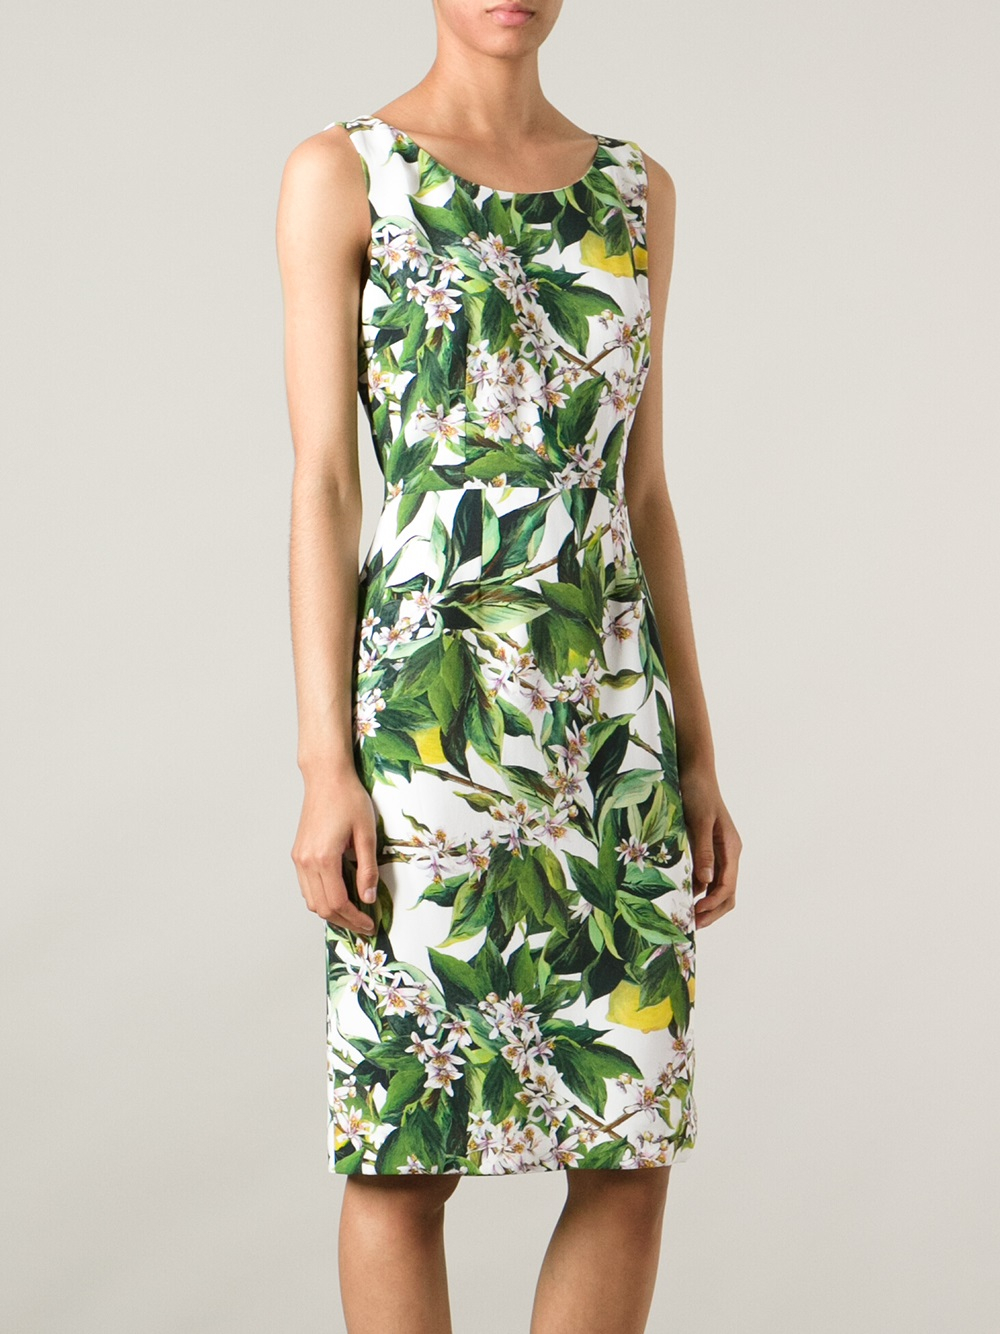 dolce gabbana green sleeveless floral dress product 1 19235042 3 301471982 normal